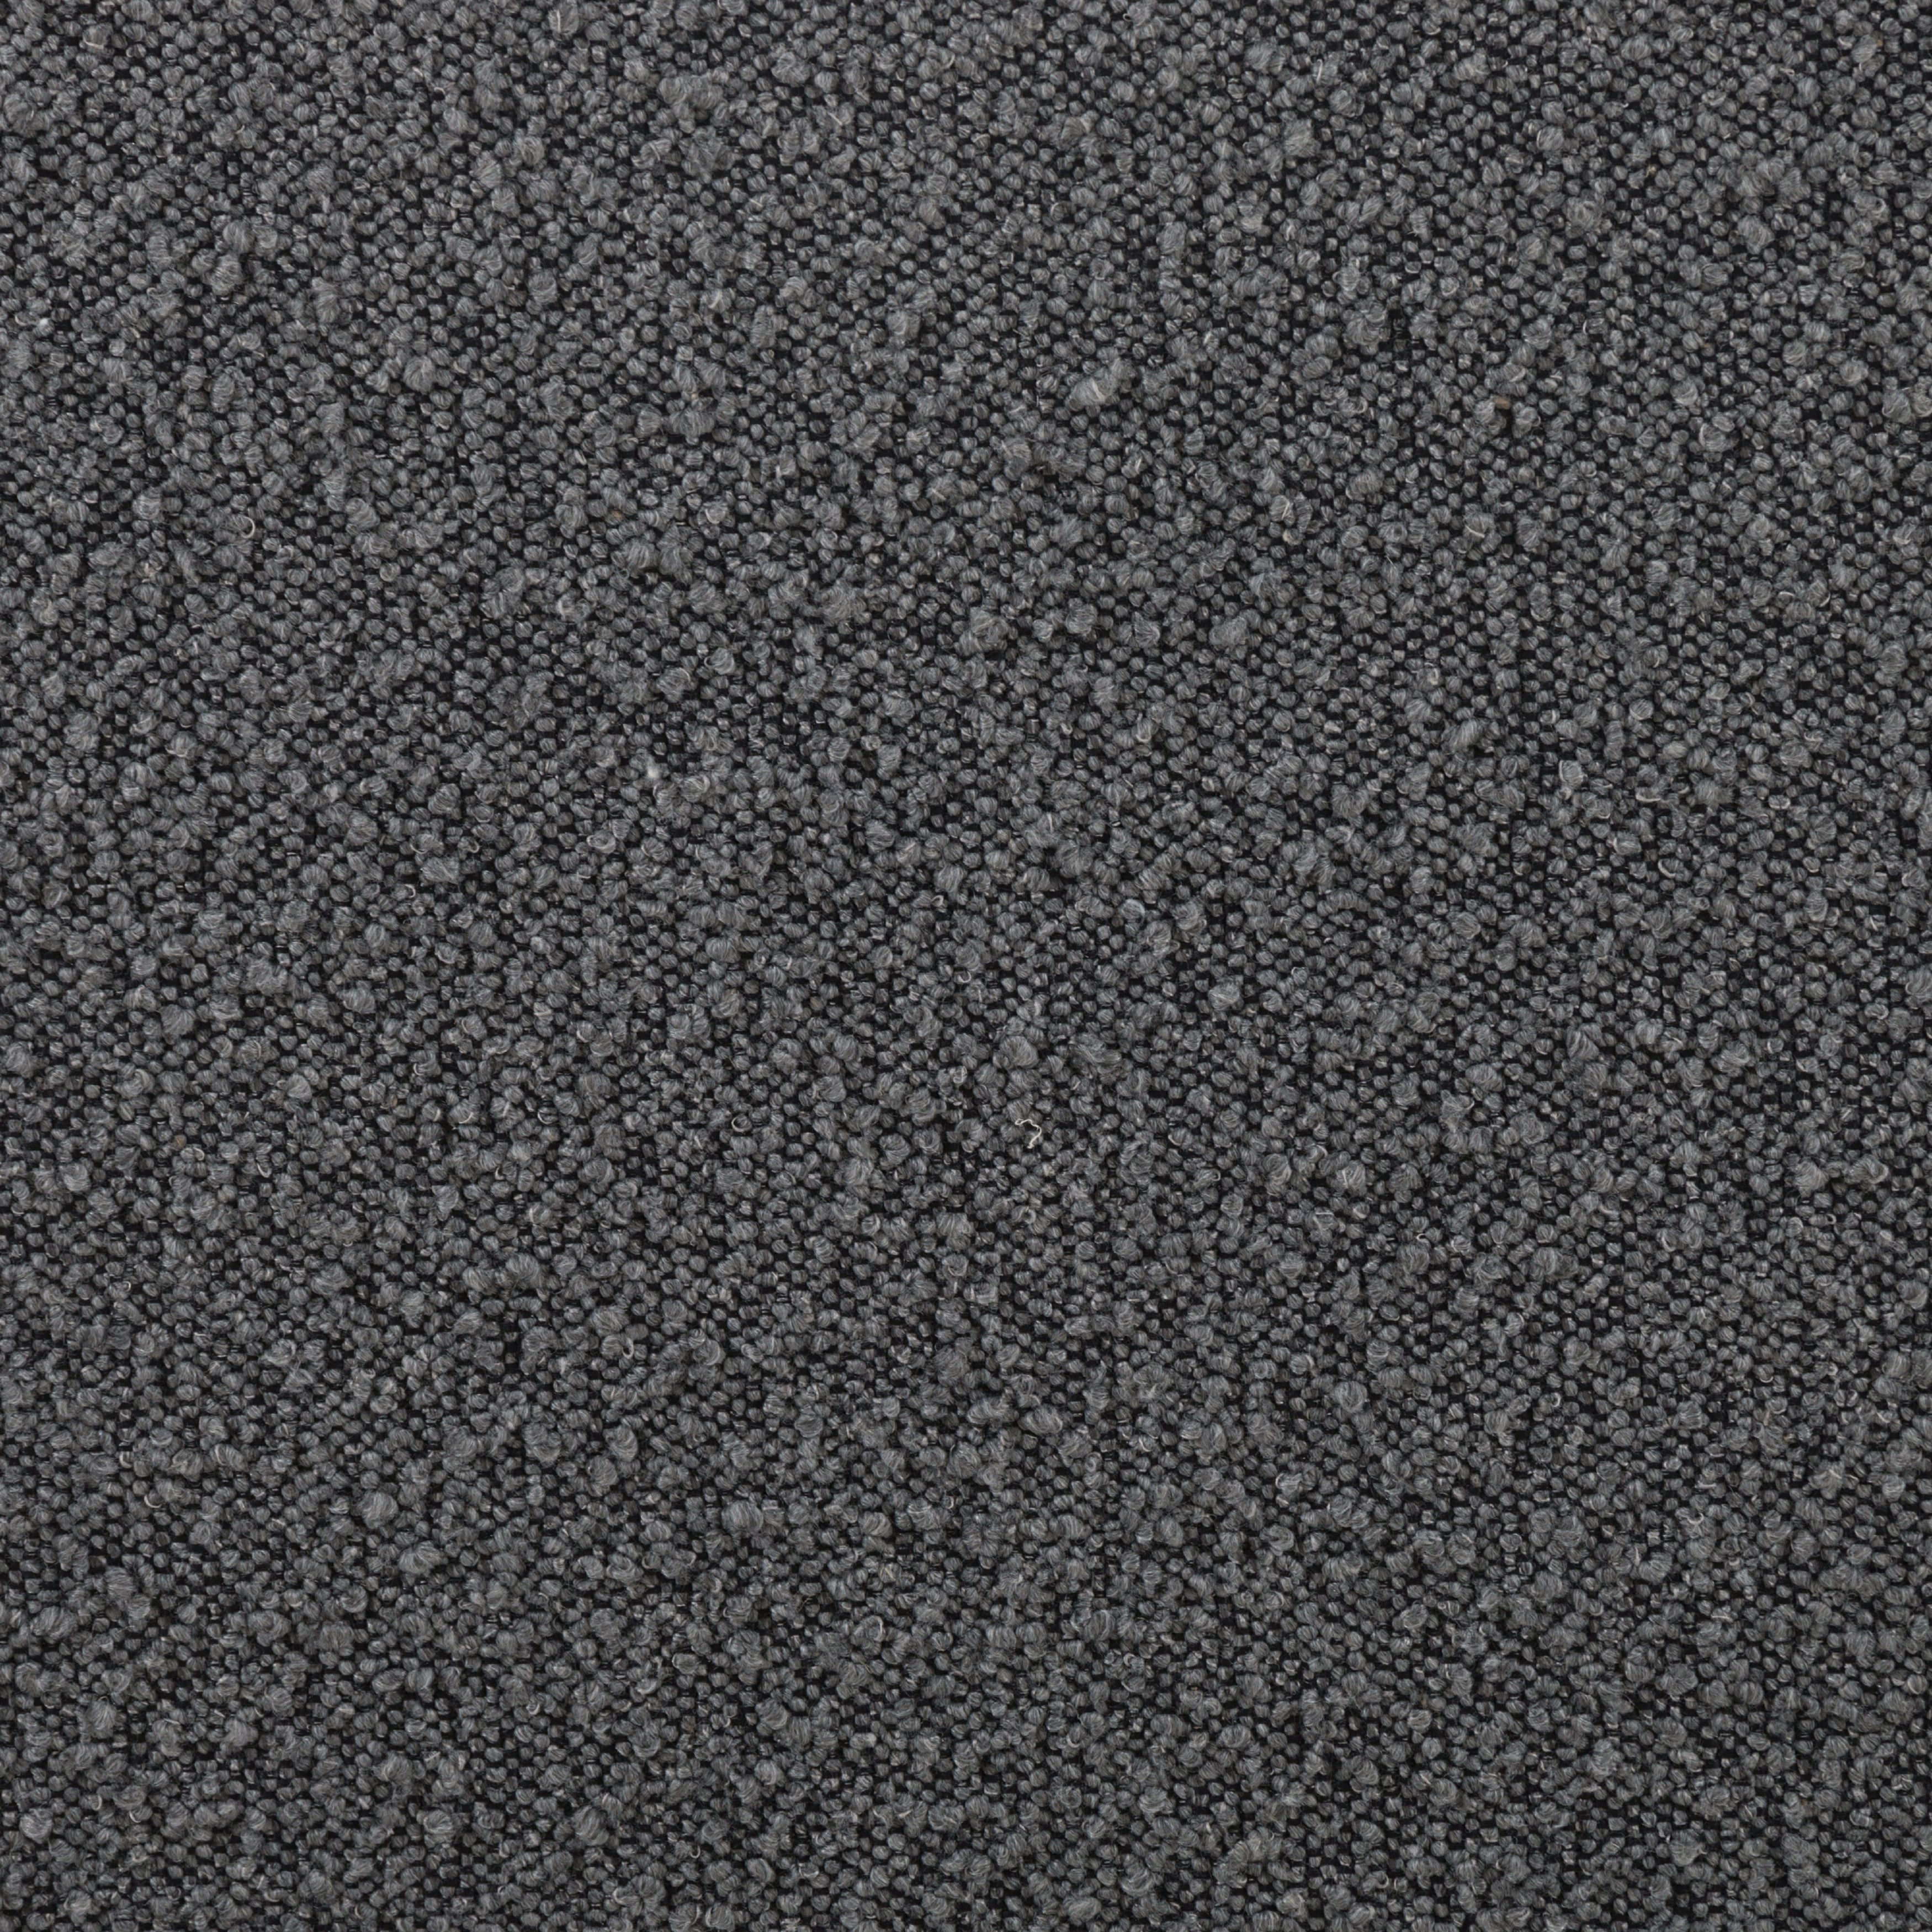 Knoll Charcoal Fabric | Kimora Chair | Valley Ridge Furniture